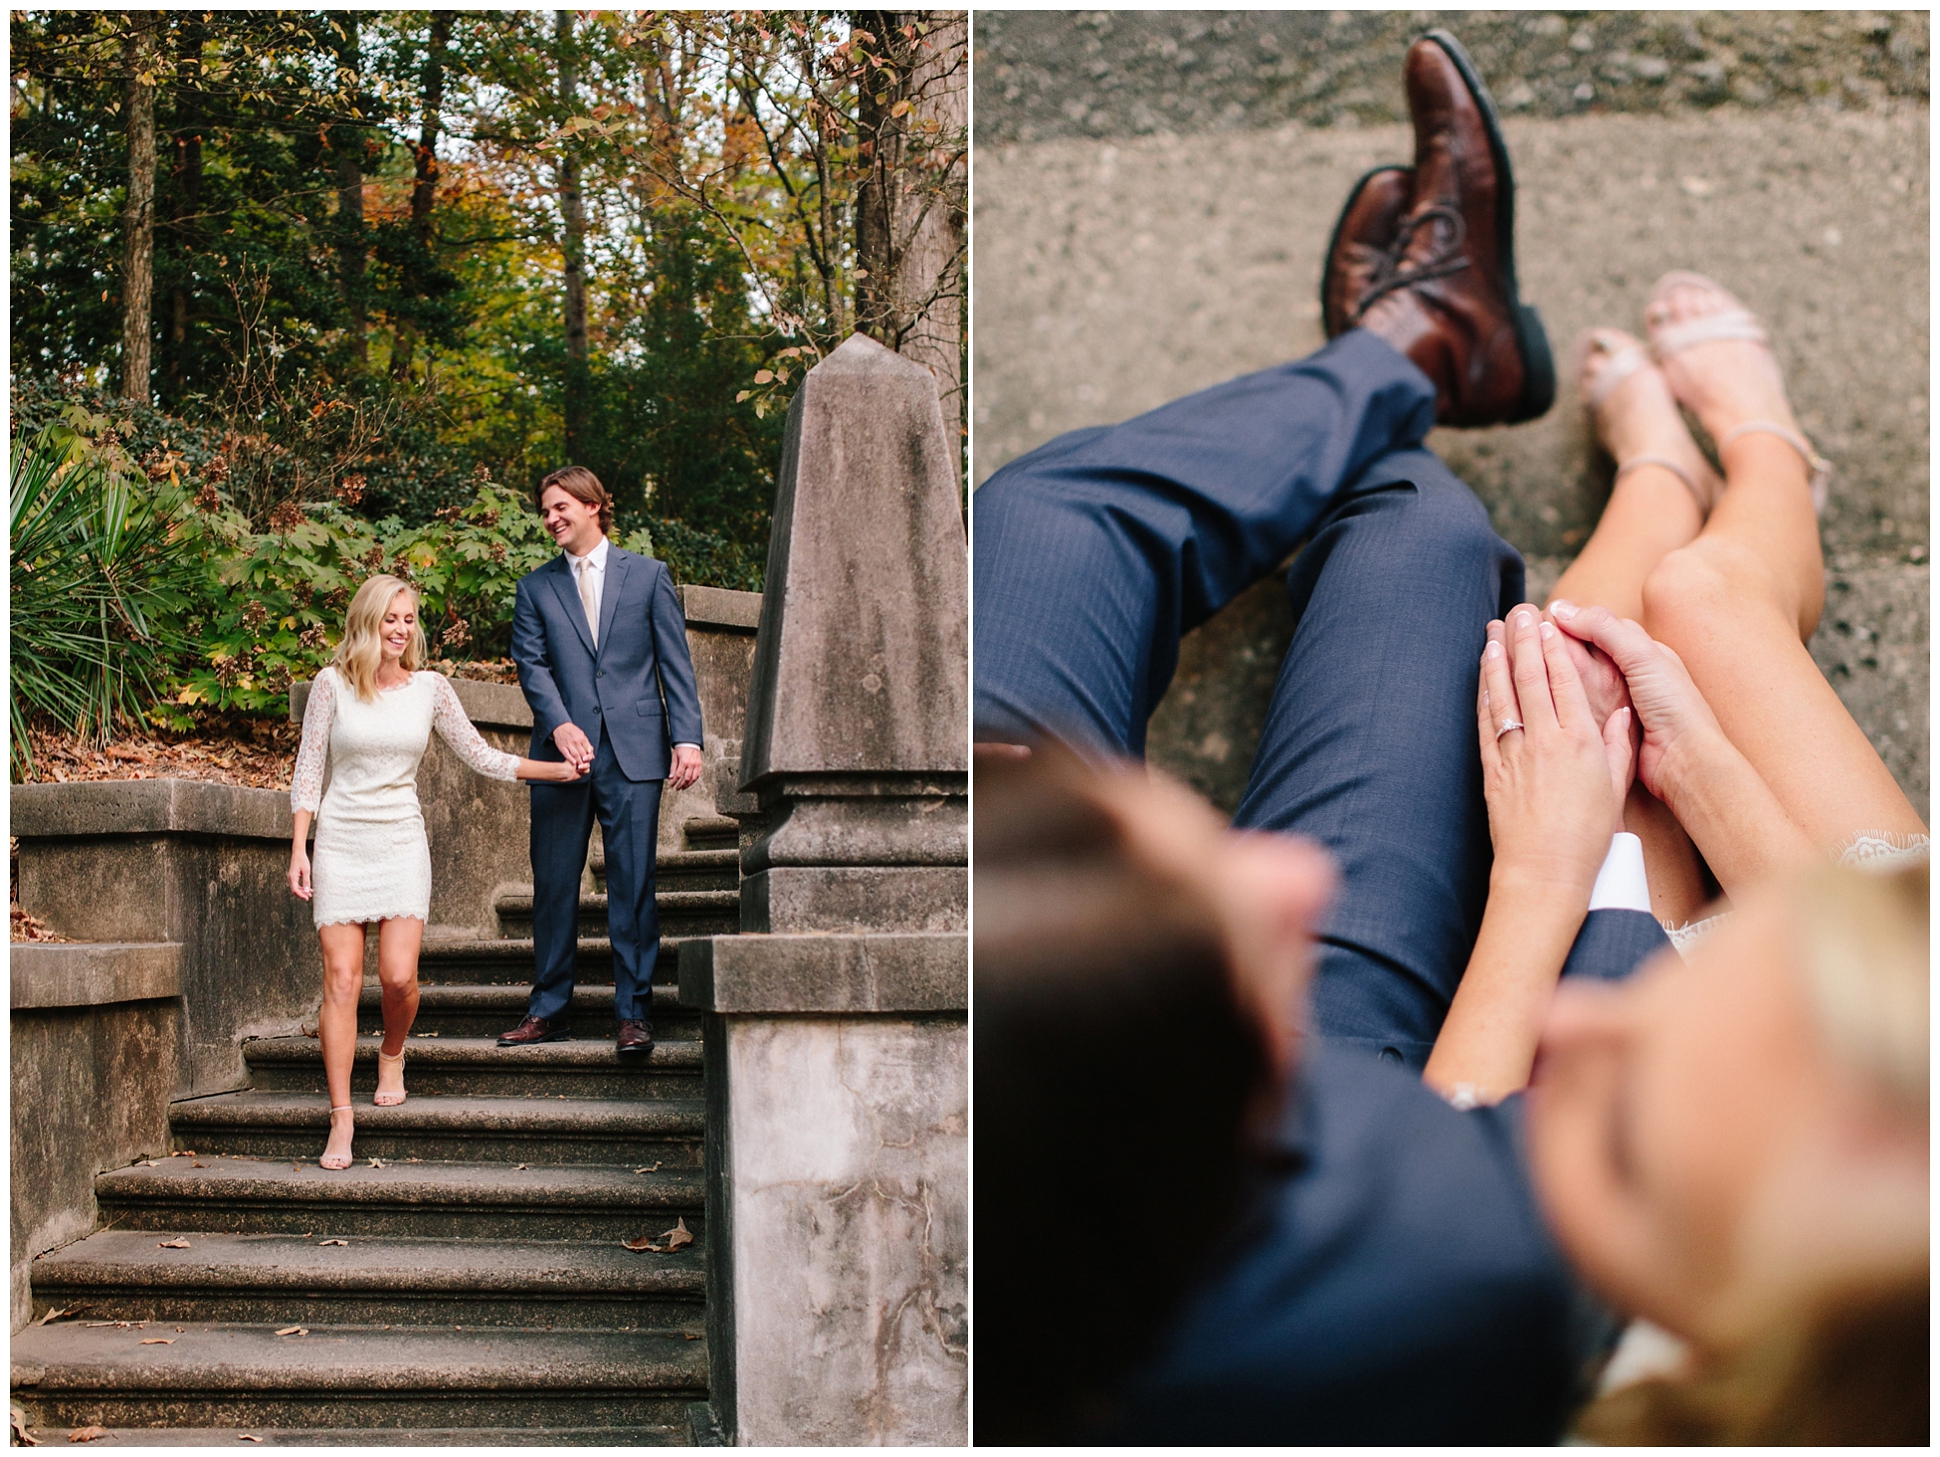 5 Reasons You Should Make an Engagement Session Happen | Atlanta, Georgia Wedding Photographers | Swan House Engagement Session | Two Chics Photography | www.twochicsphotography.com